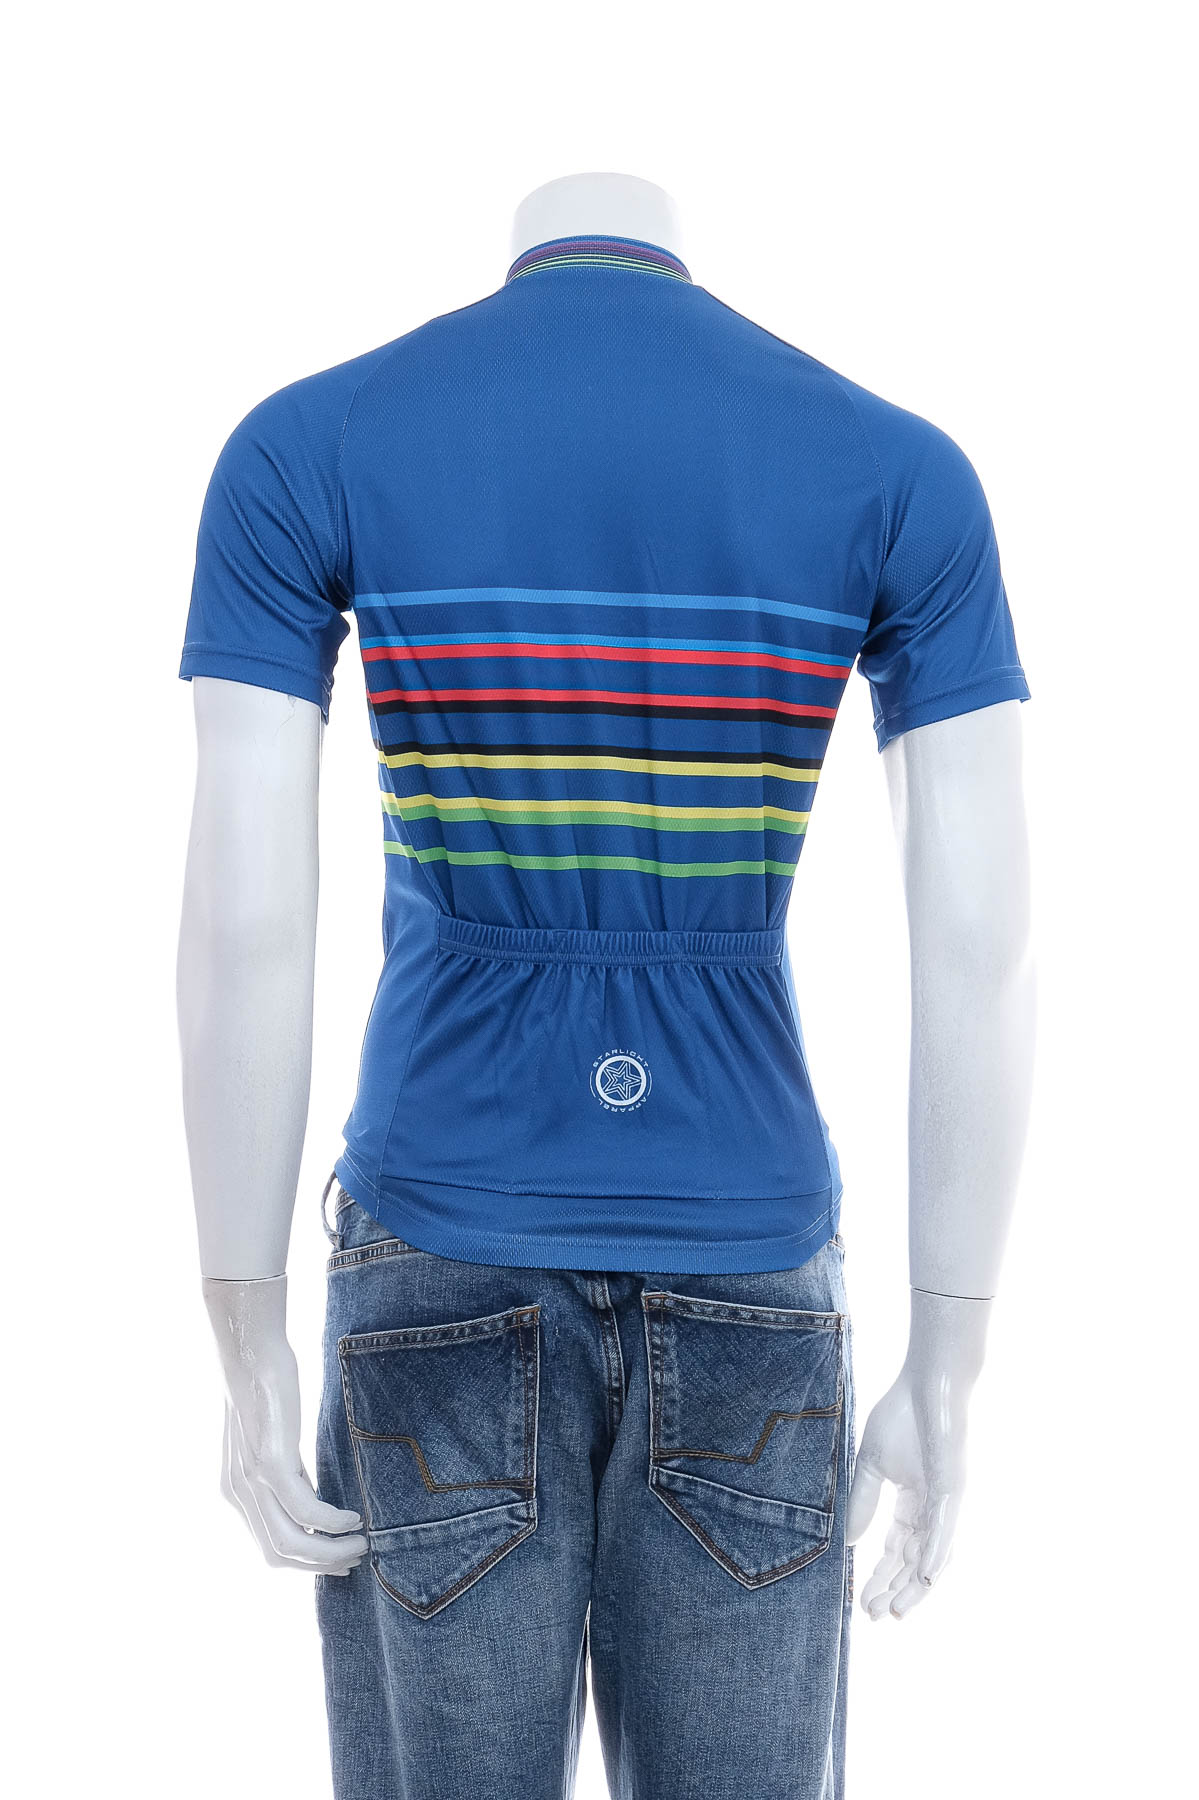 Men's T-shirt for cycling - STARLIGHT - 1